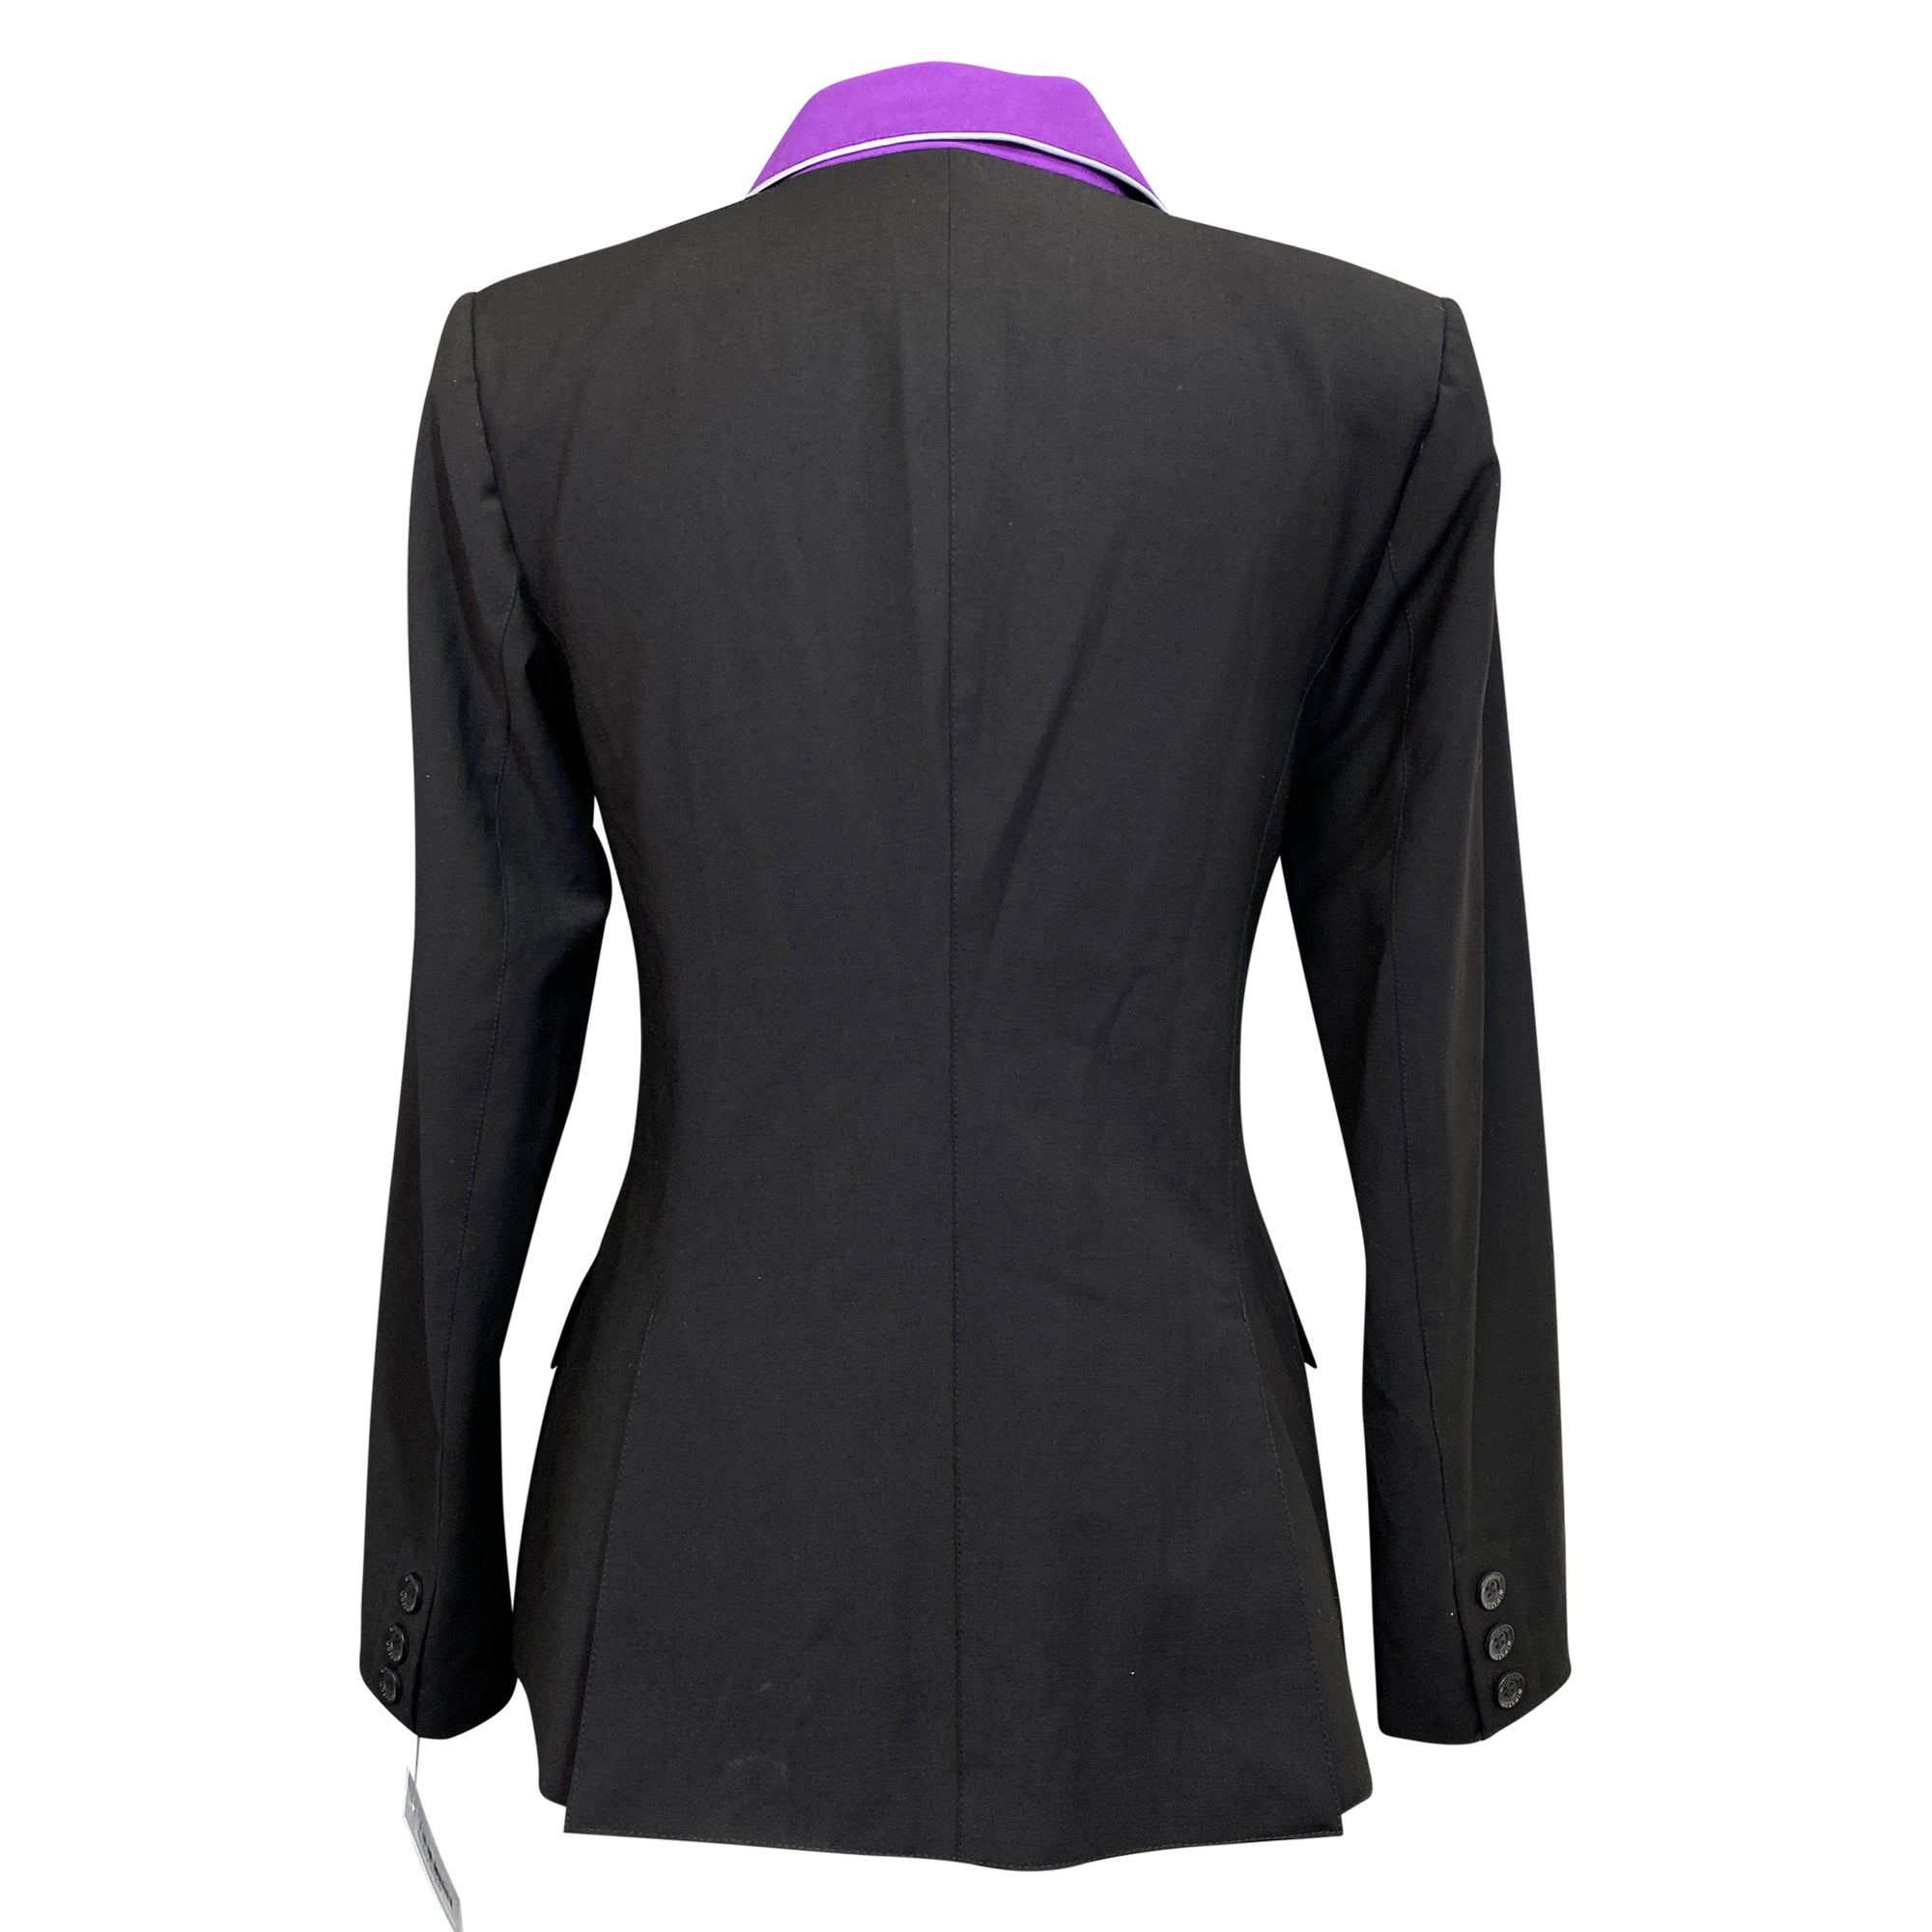 Winston Equestrian Classic Competition Coat in Black/Purple - Women&#39;s 40T (US 8T)